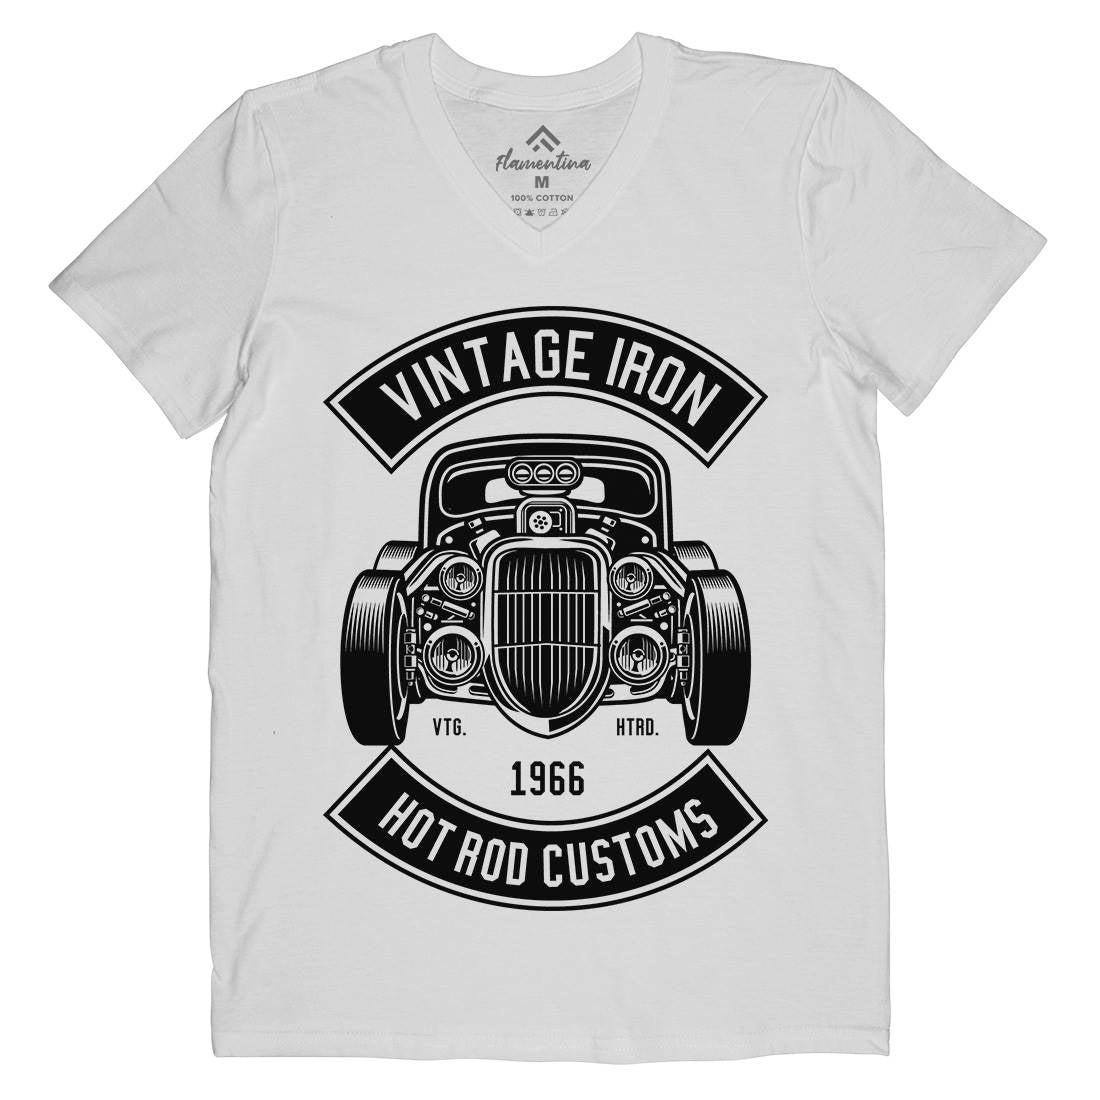 Vintage Iron Mens Organic V-Neck T-Shirt Cars B666